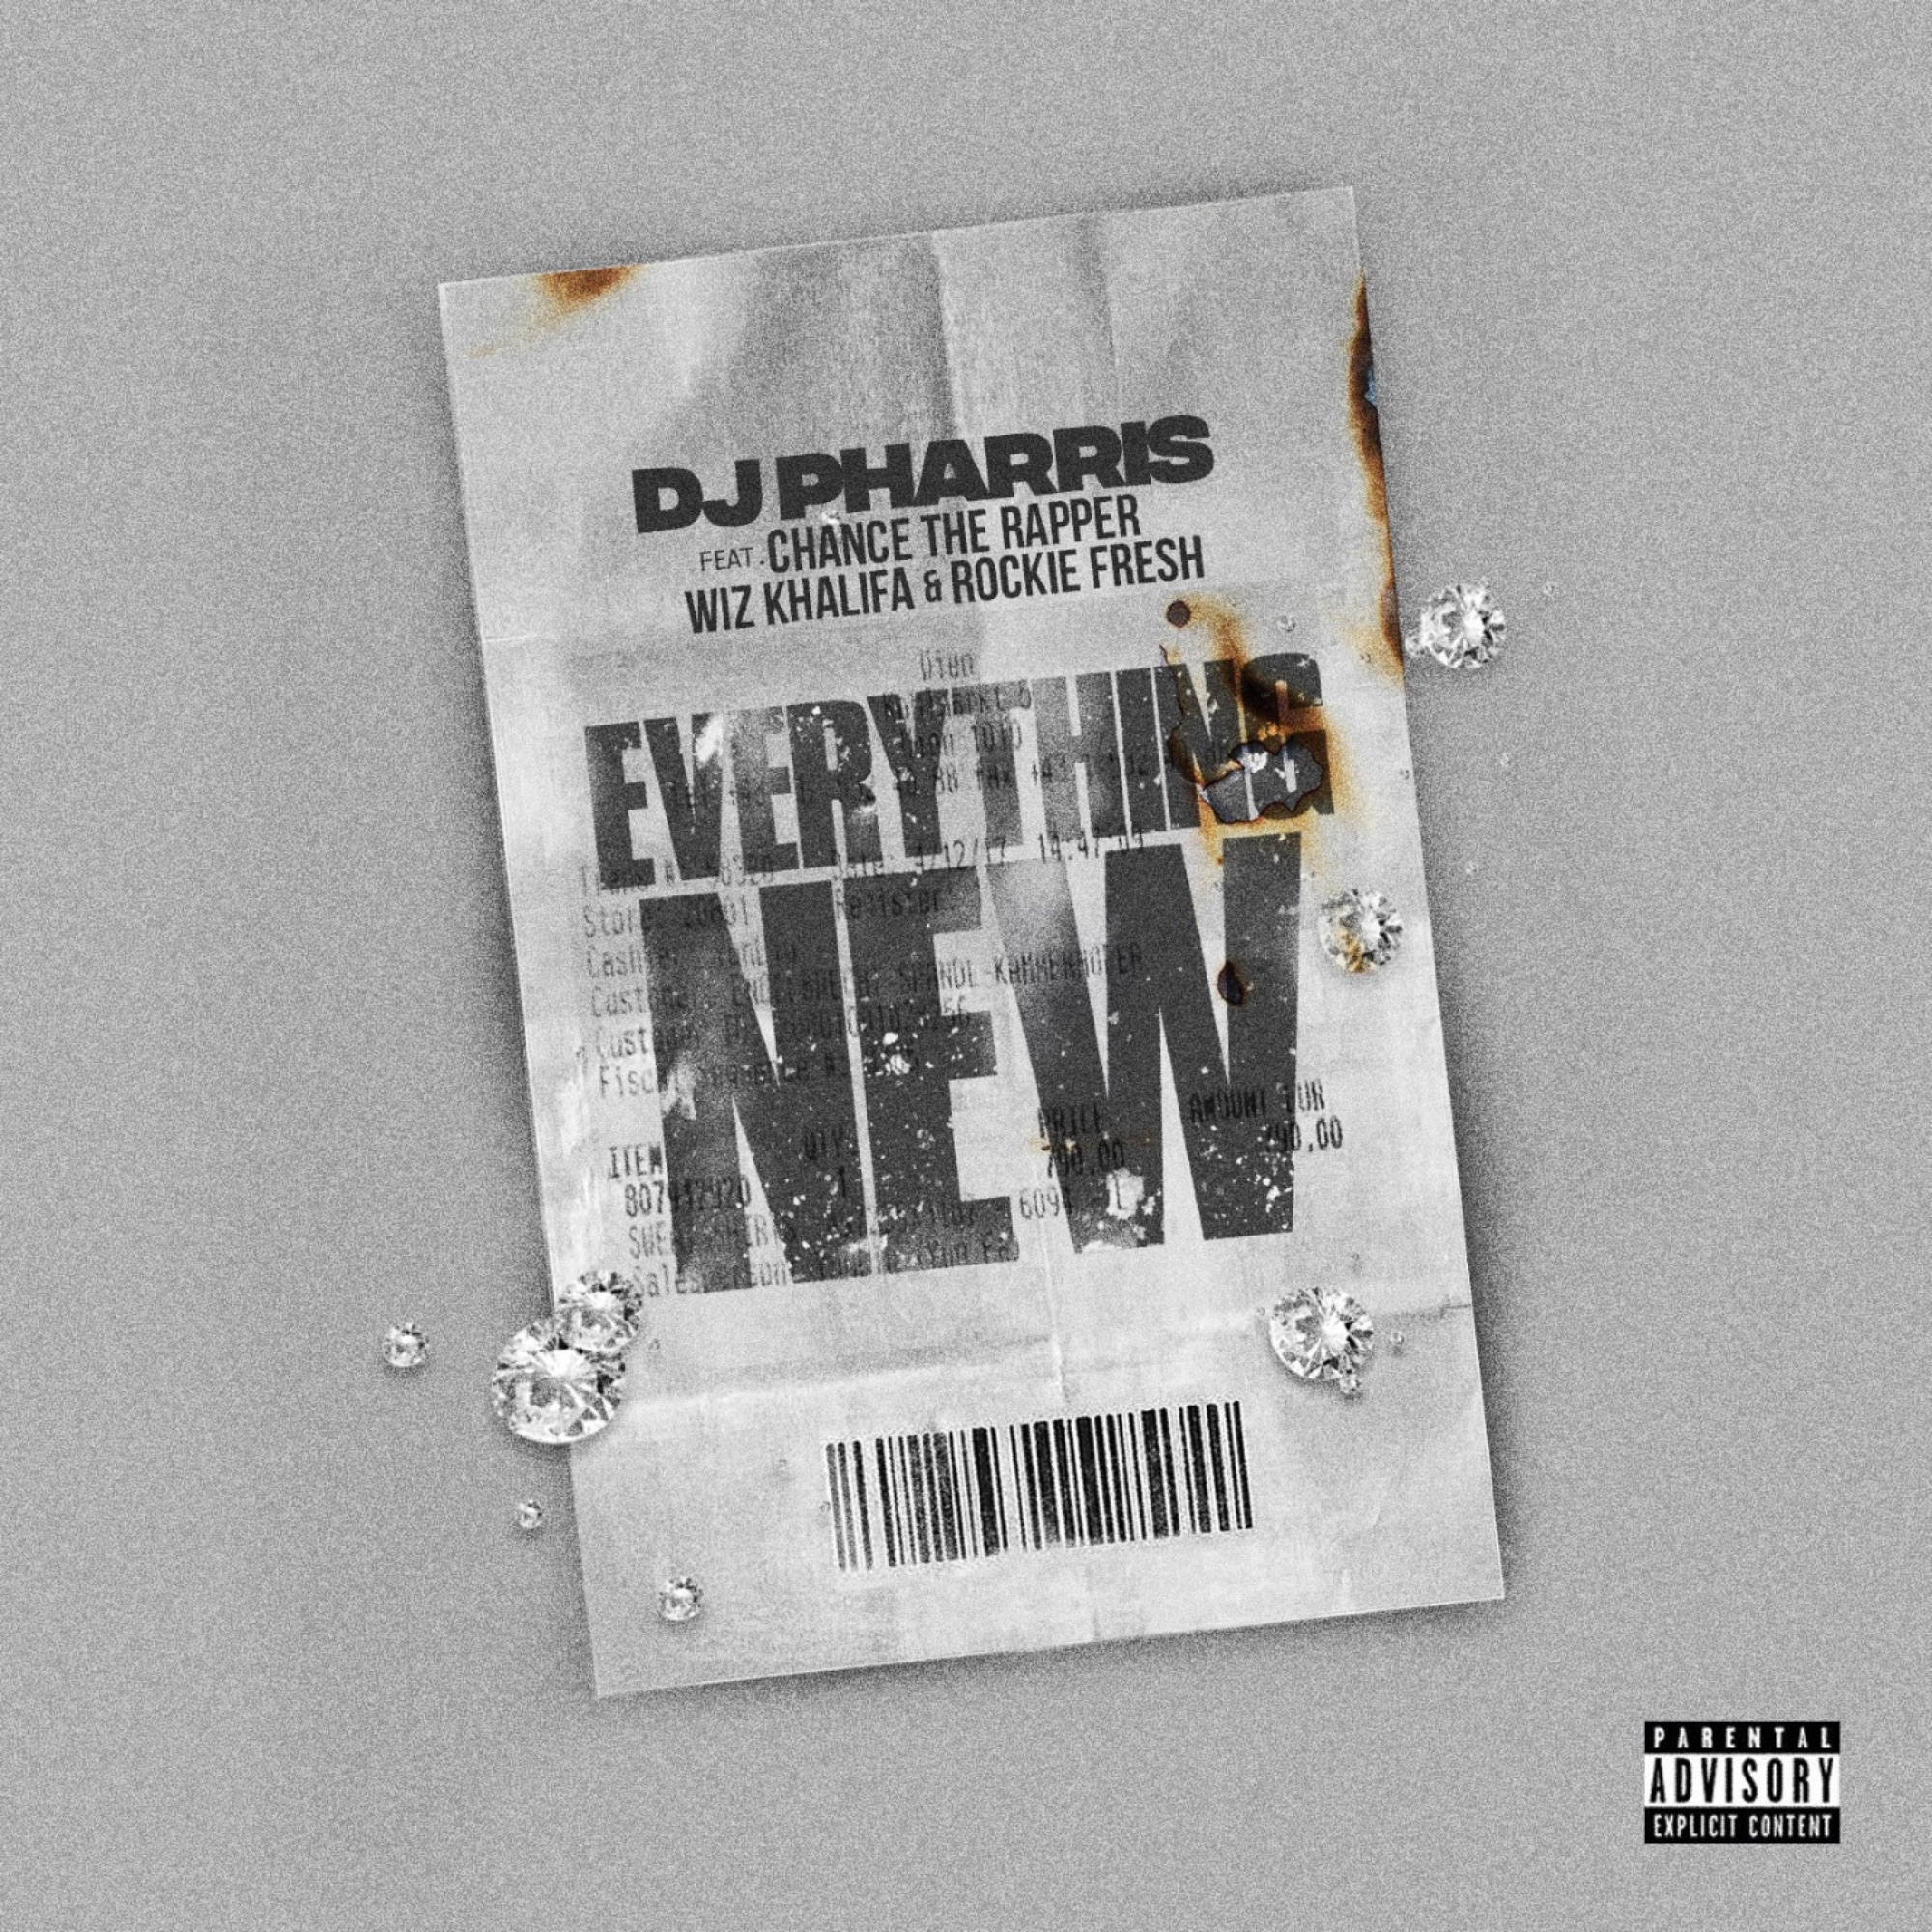 DJ Pharris - Everything New (feat. Chance the Rapper, Wiz Khalifa, Rockie Fresh) - Single